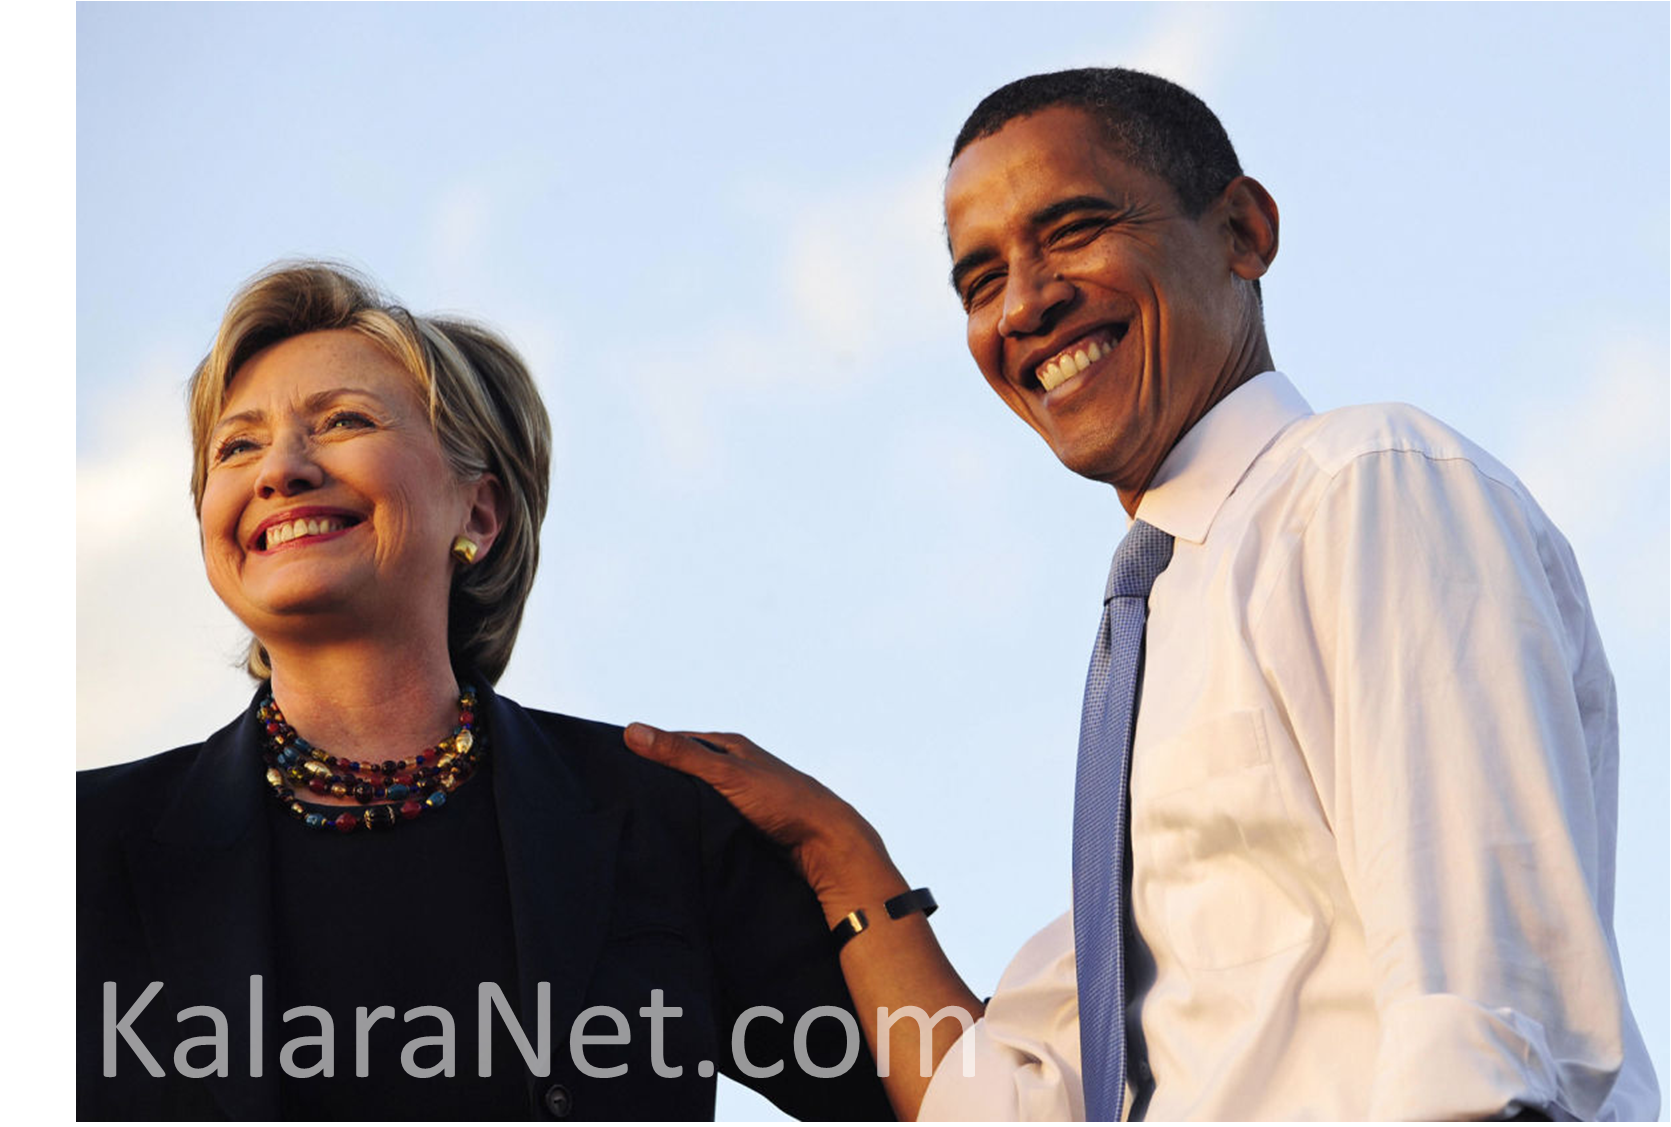 Hilary Clinton assumera-t-elle le bilan de Barack Obama